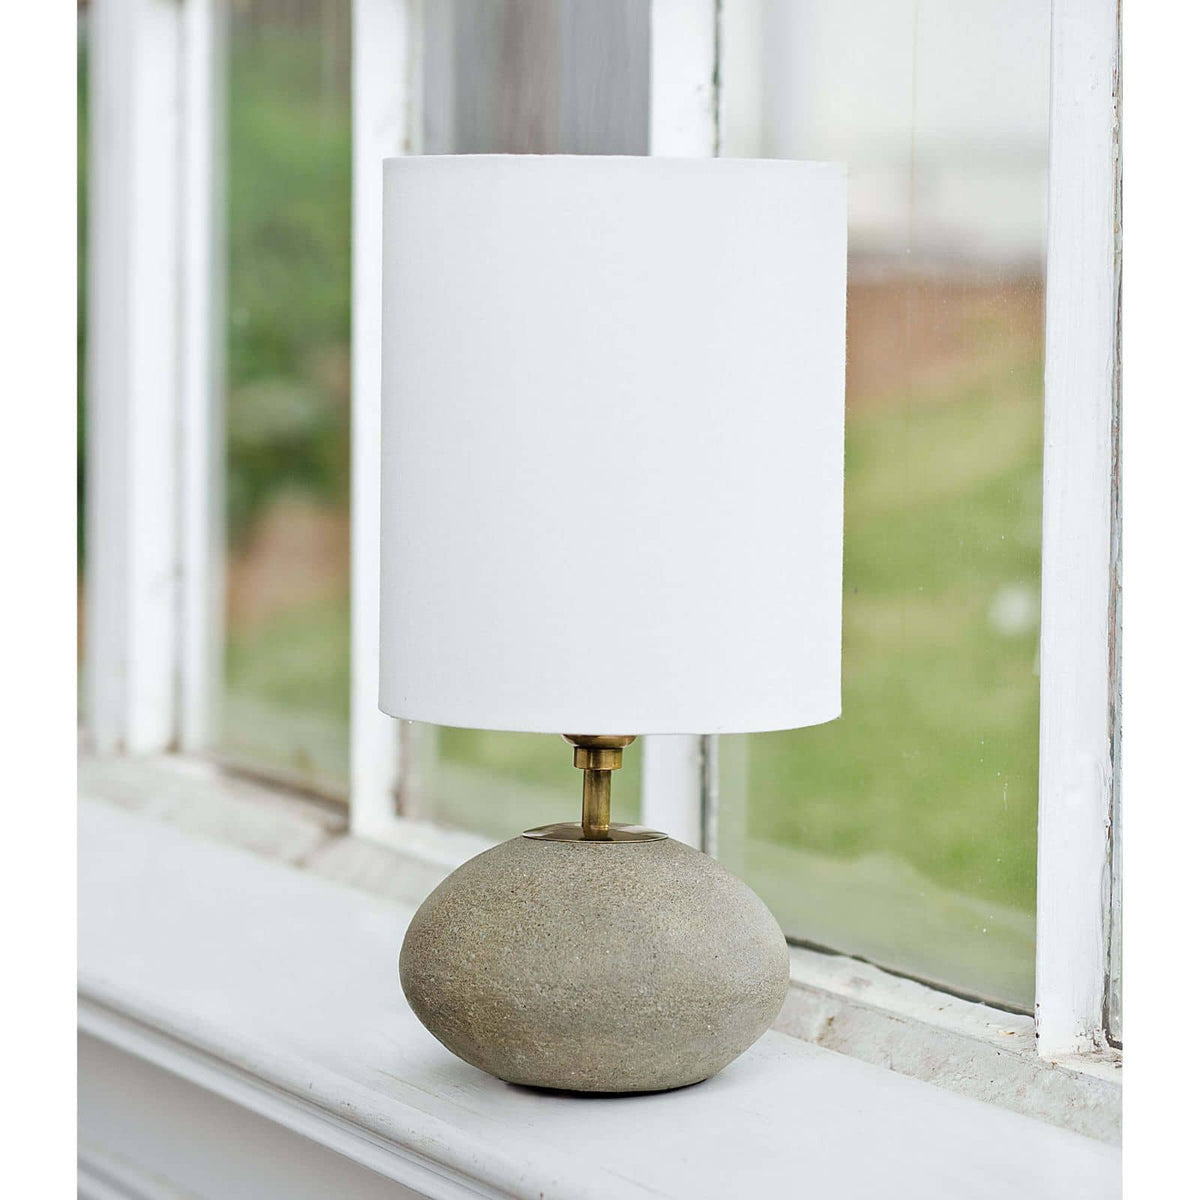 Concrete mini orb lamp on window sill